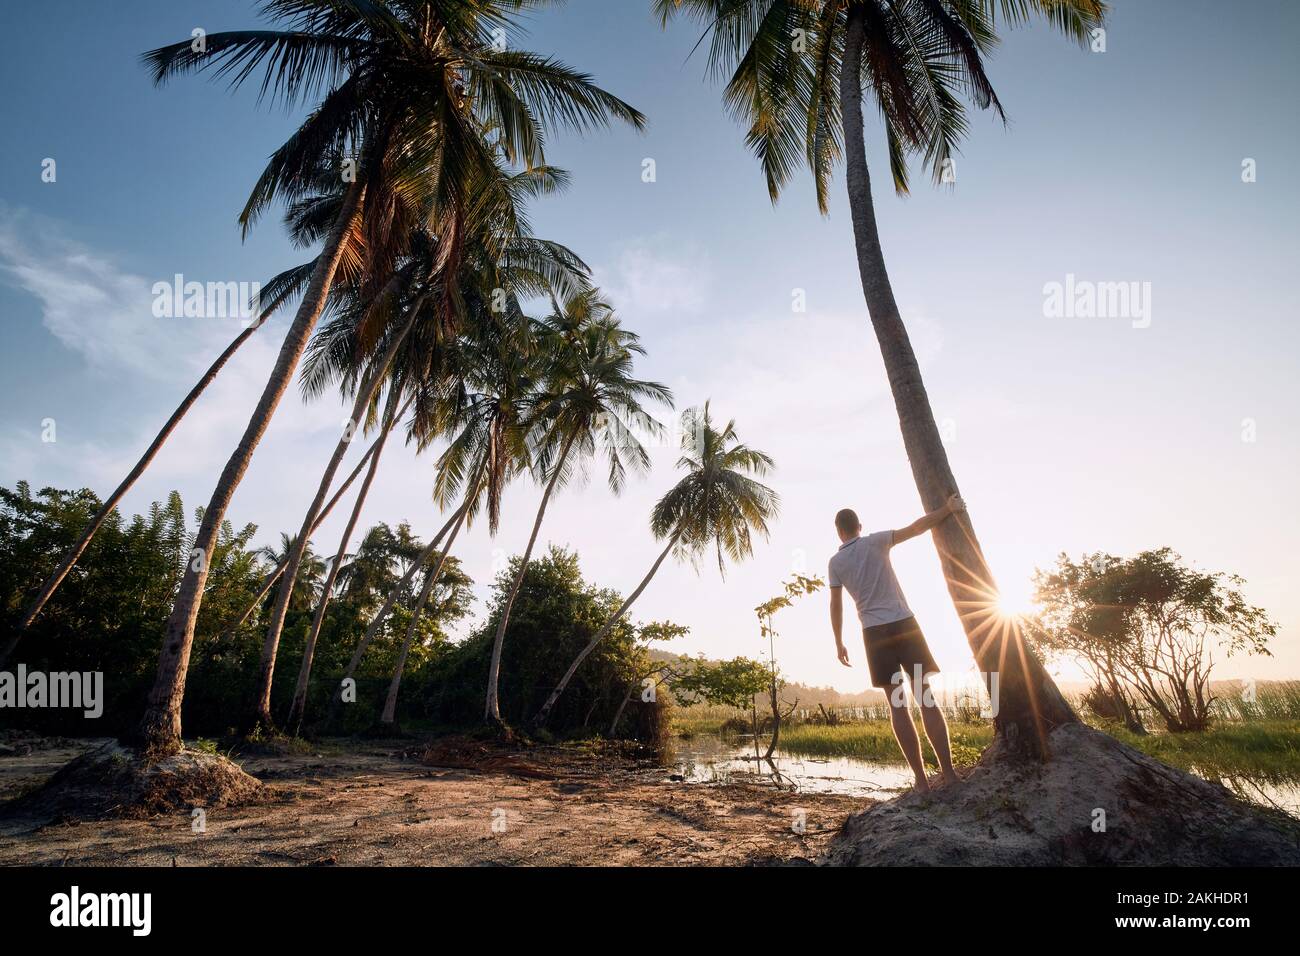 Young man standing under palm tree and watching sunset, Sri Lanka. Stock Photo